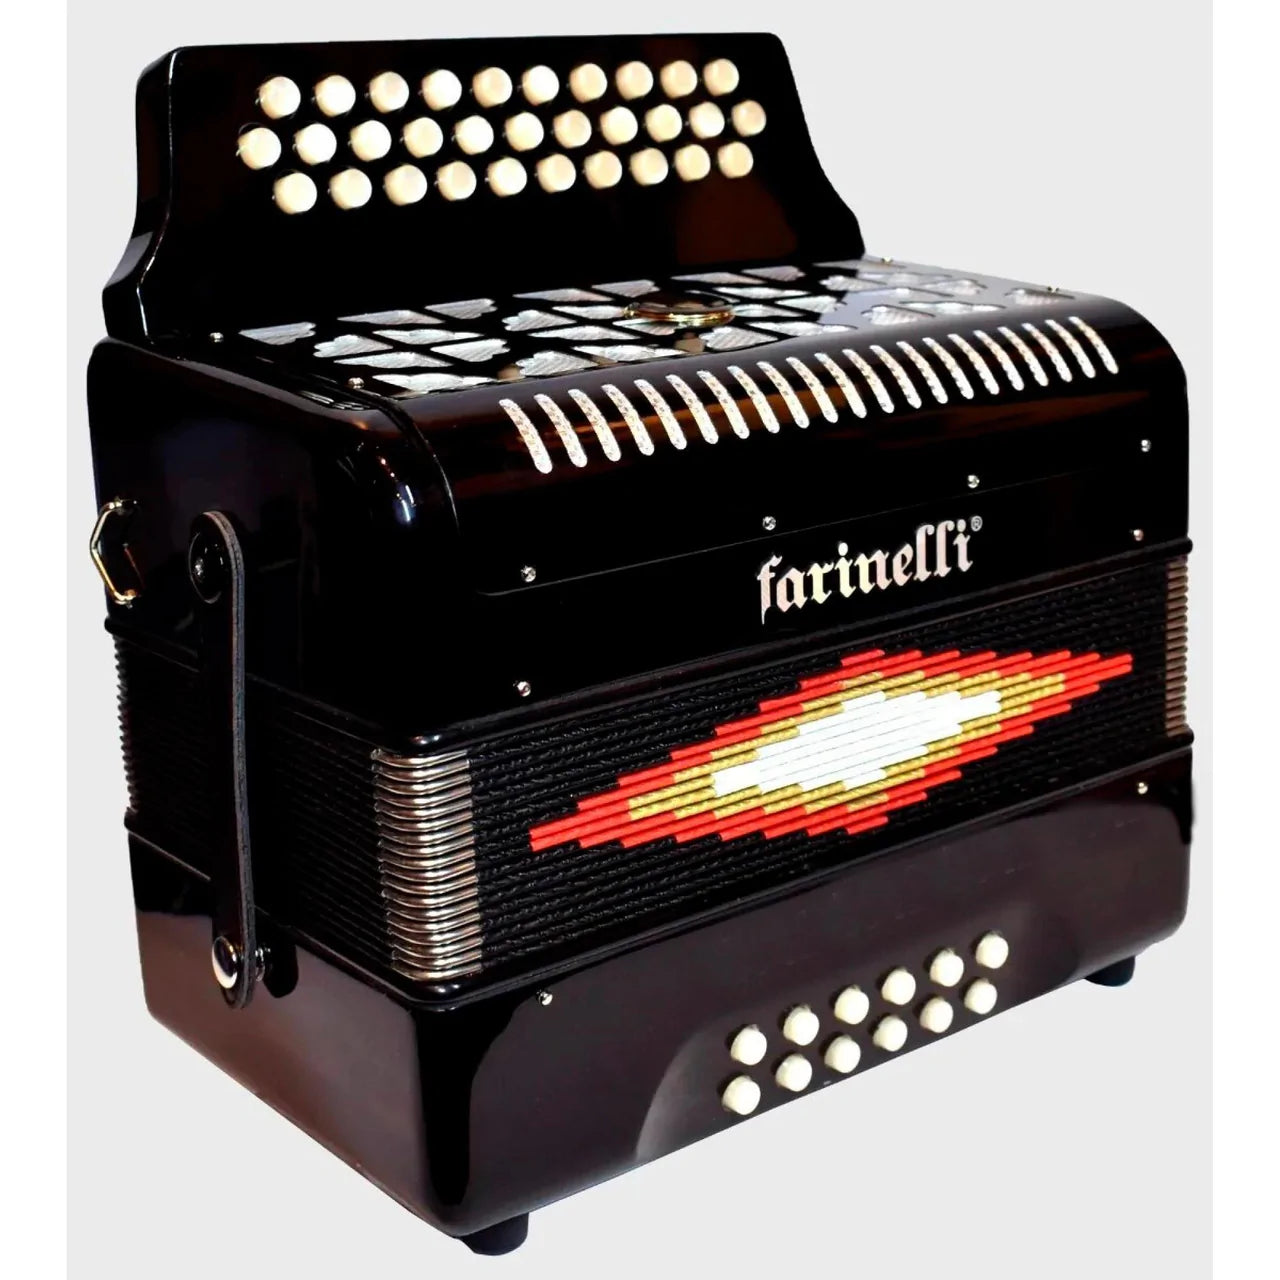 Farinelli 3012n Acordeon Botones Sol Negro 3012 – Sonoritmo Audio  profesional e Intrumentos musicales